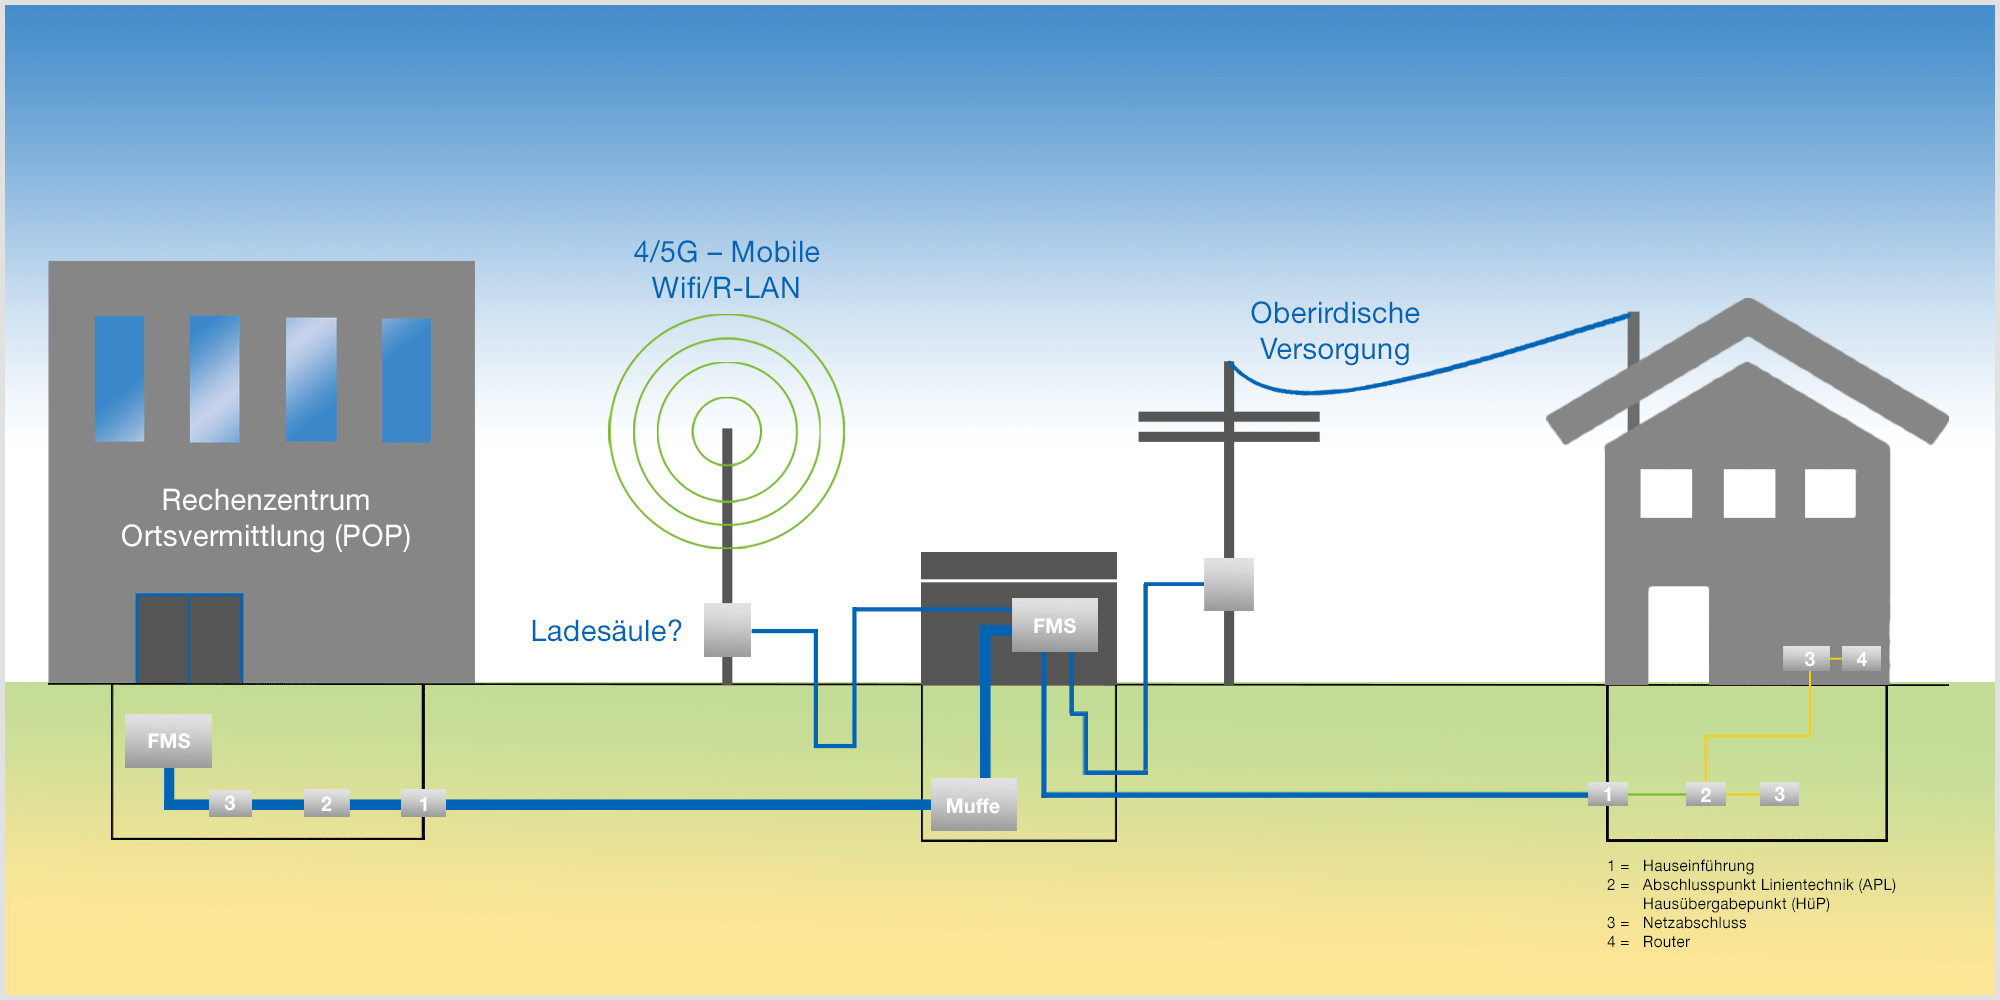 Relevante Netzelemente zum Anschluss an das Breitbandnetz